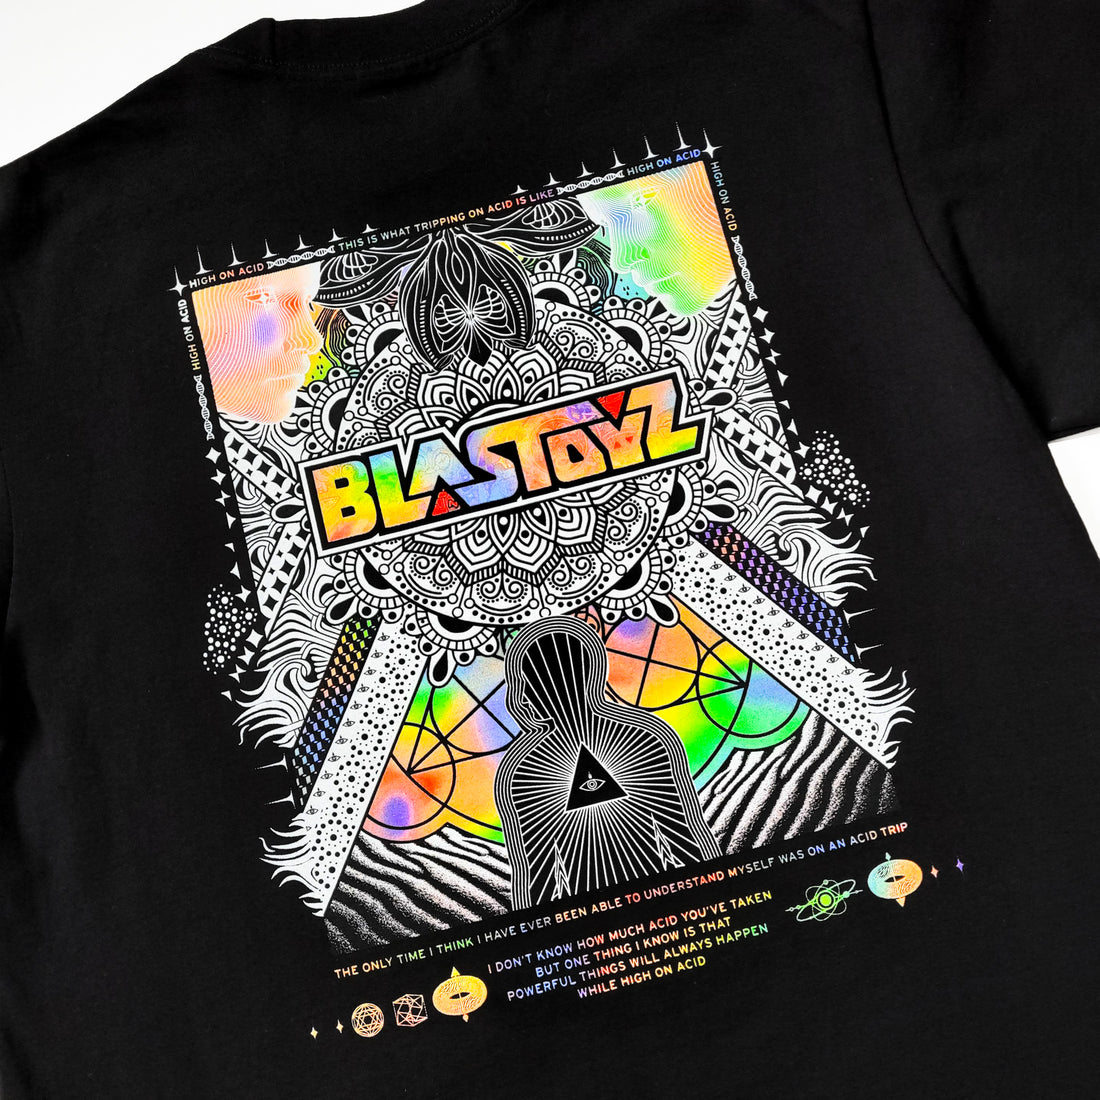 Blastoyz - High On Acid Heavyweight Tee